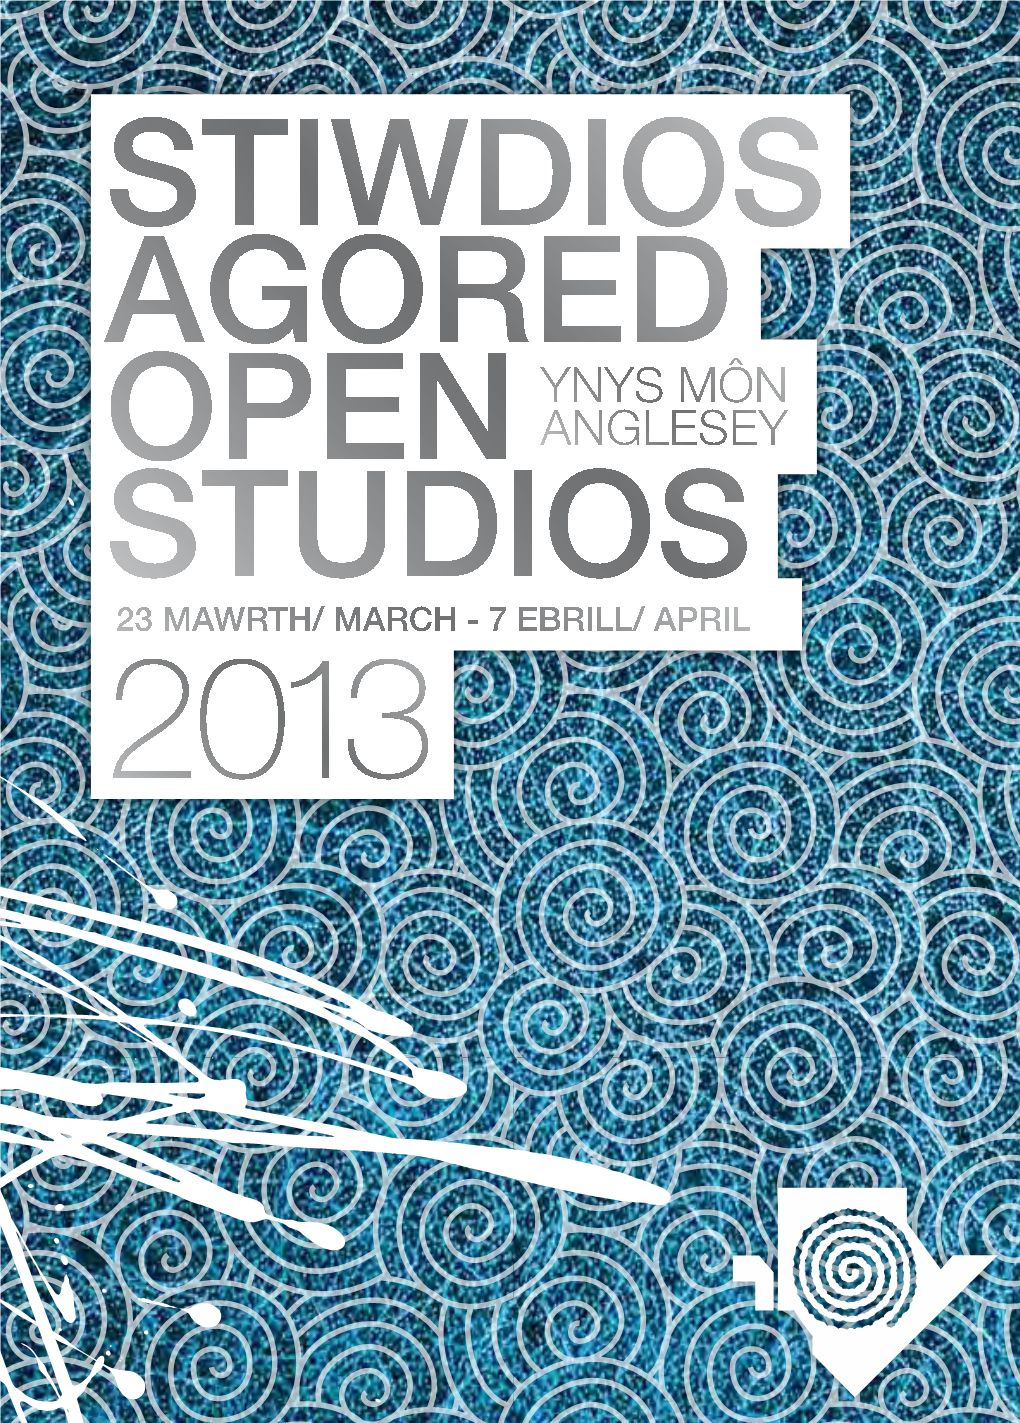 Stiwdios Agored Open Studios